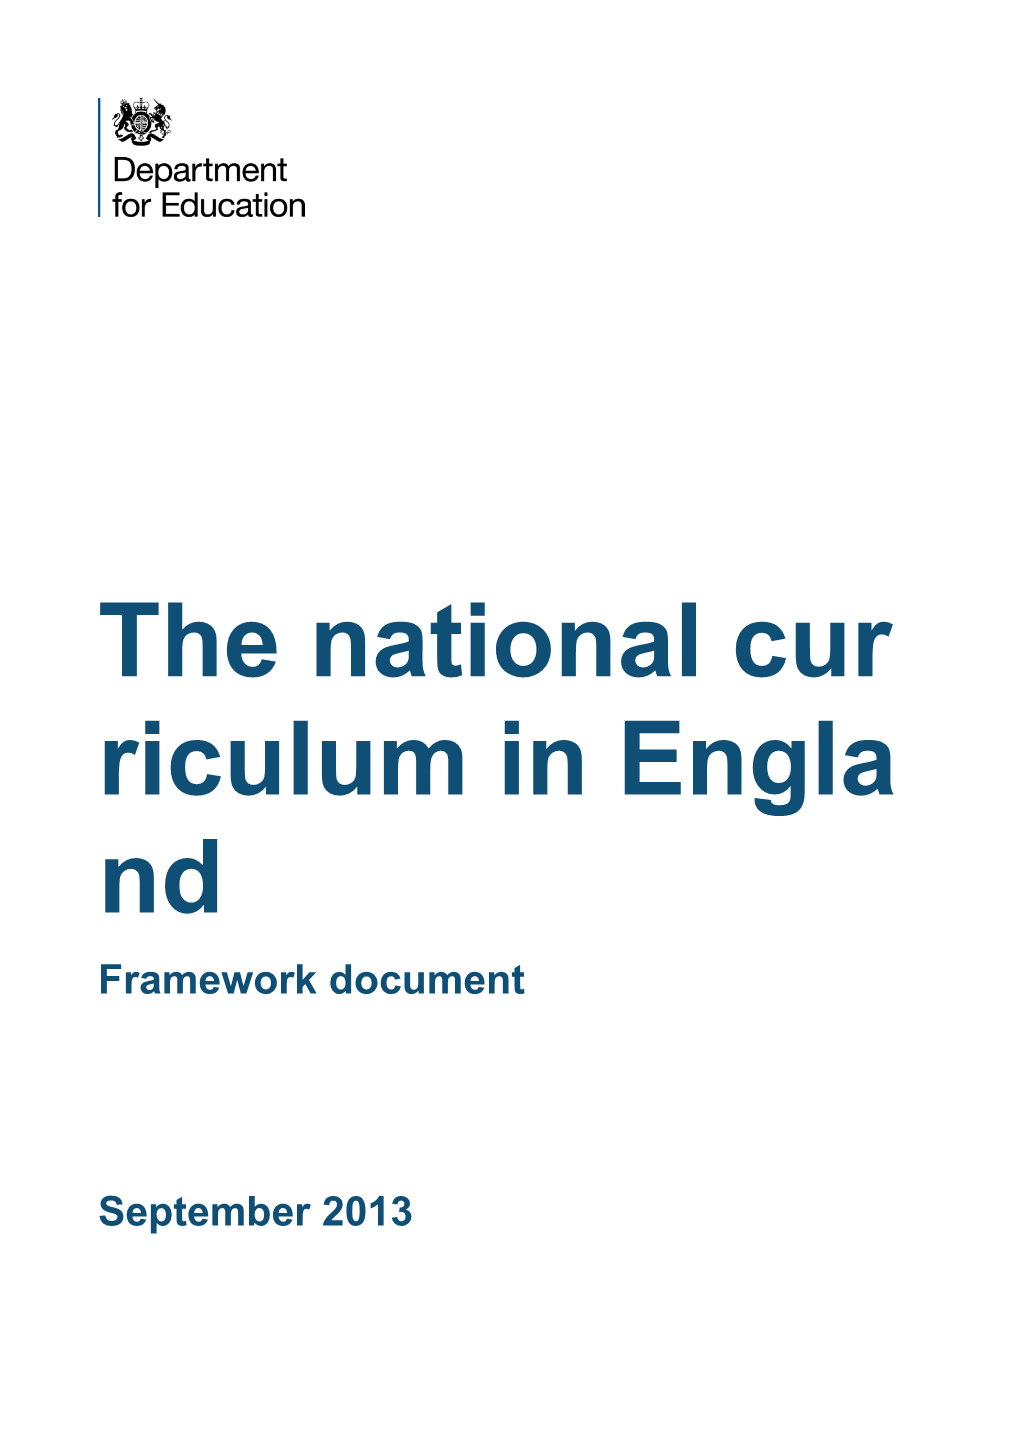 The National Curriculum In England - Framework Document